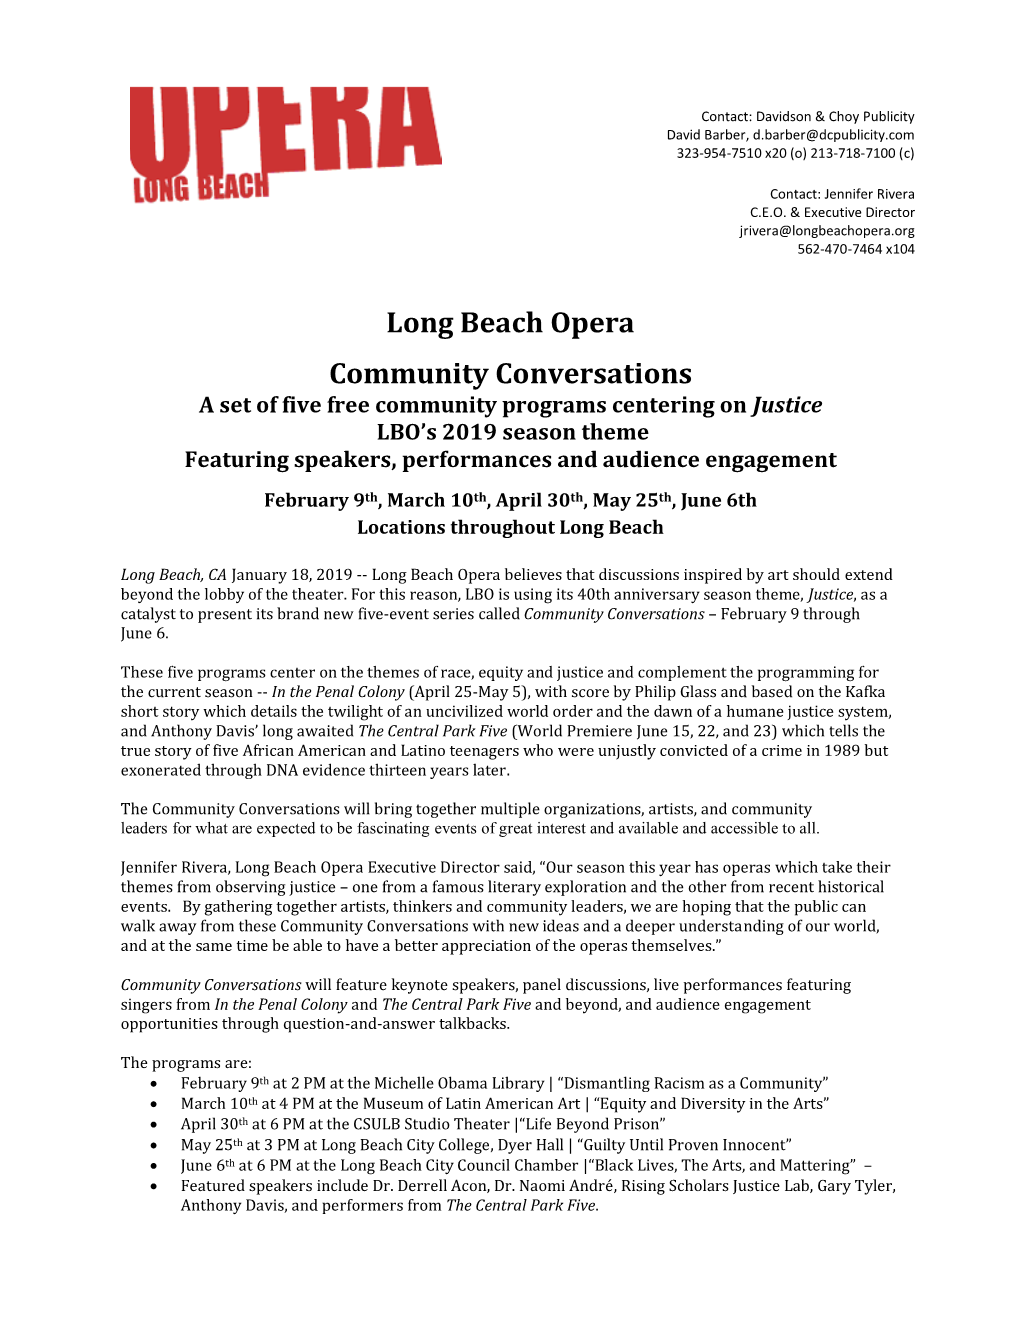 Long Beach Opera Community Conversations